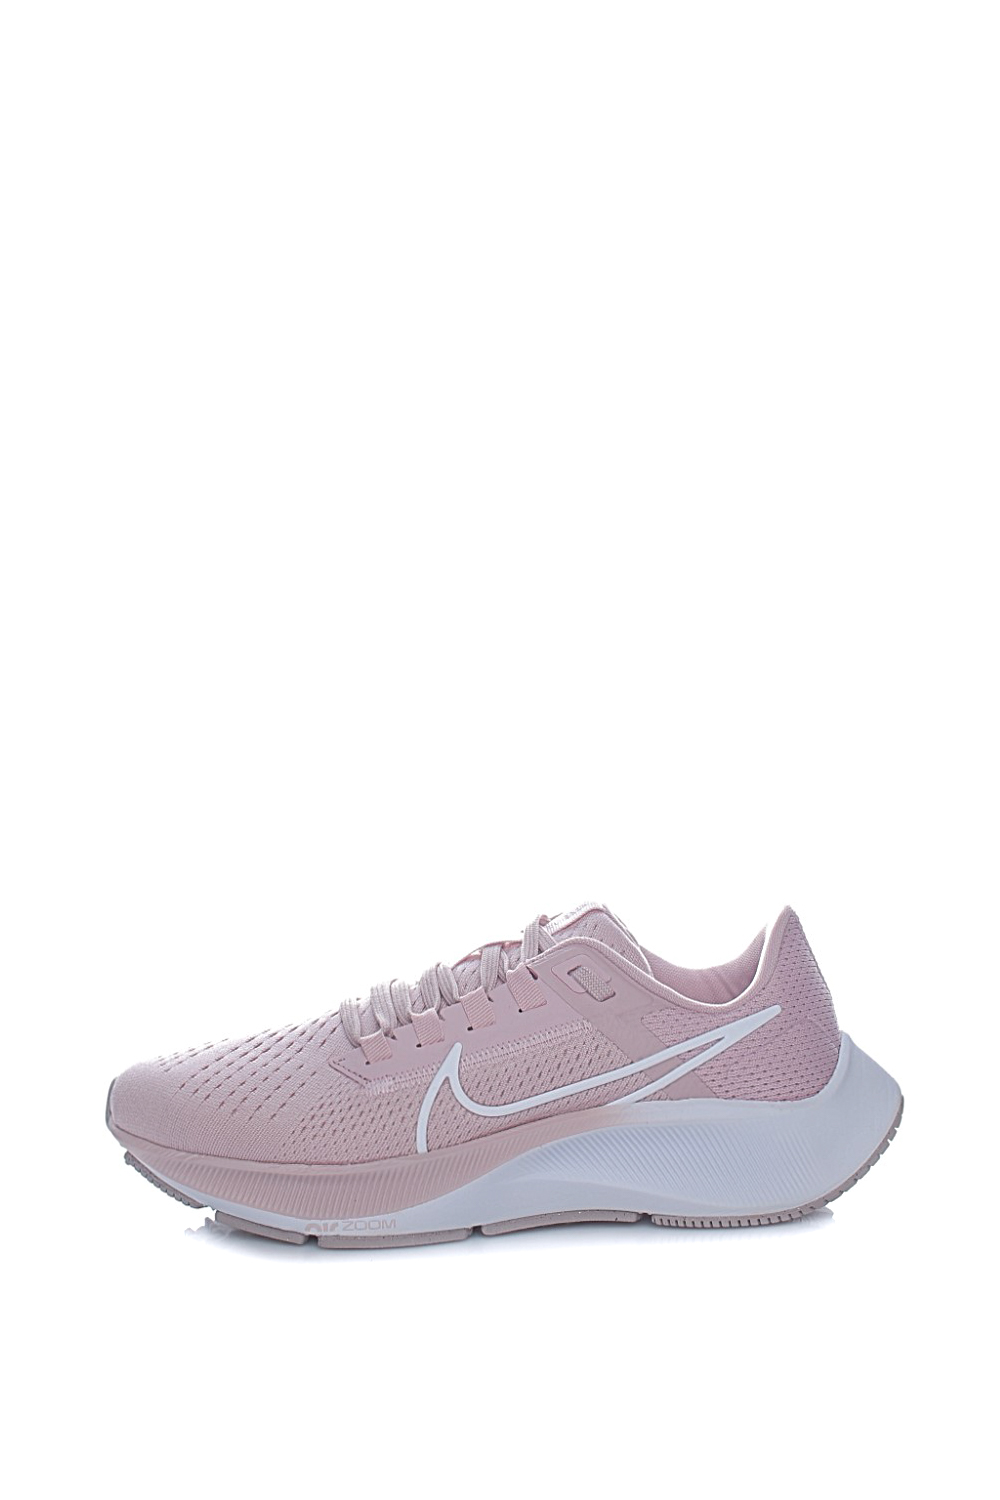 NIKE - Γυναικεία παπούτσια για τρέξιμο NIKE AIR ZOOM PEGASUS 38 ροζ Γυναικεία/Παπούτσια/Αθλητικά/Running